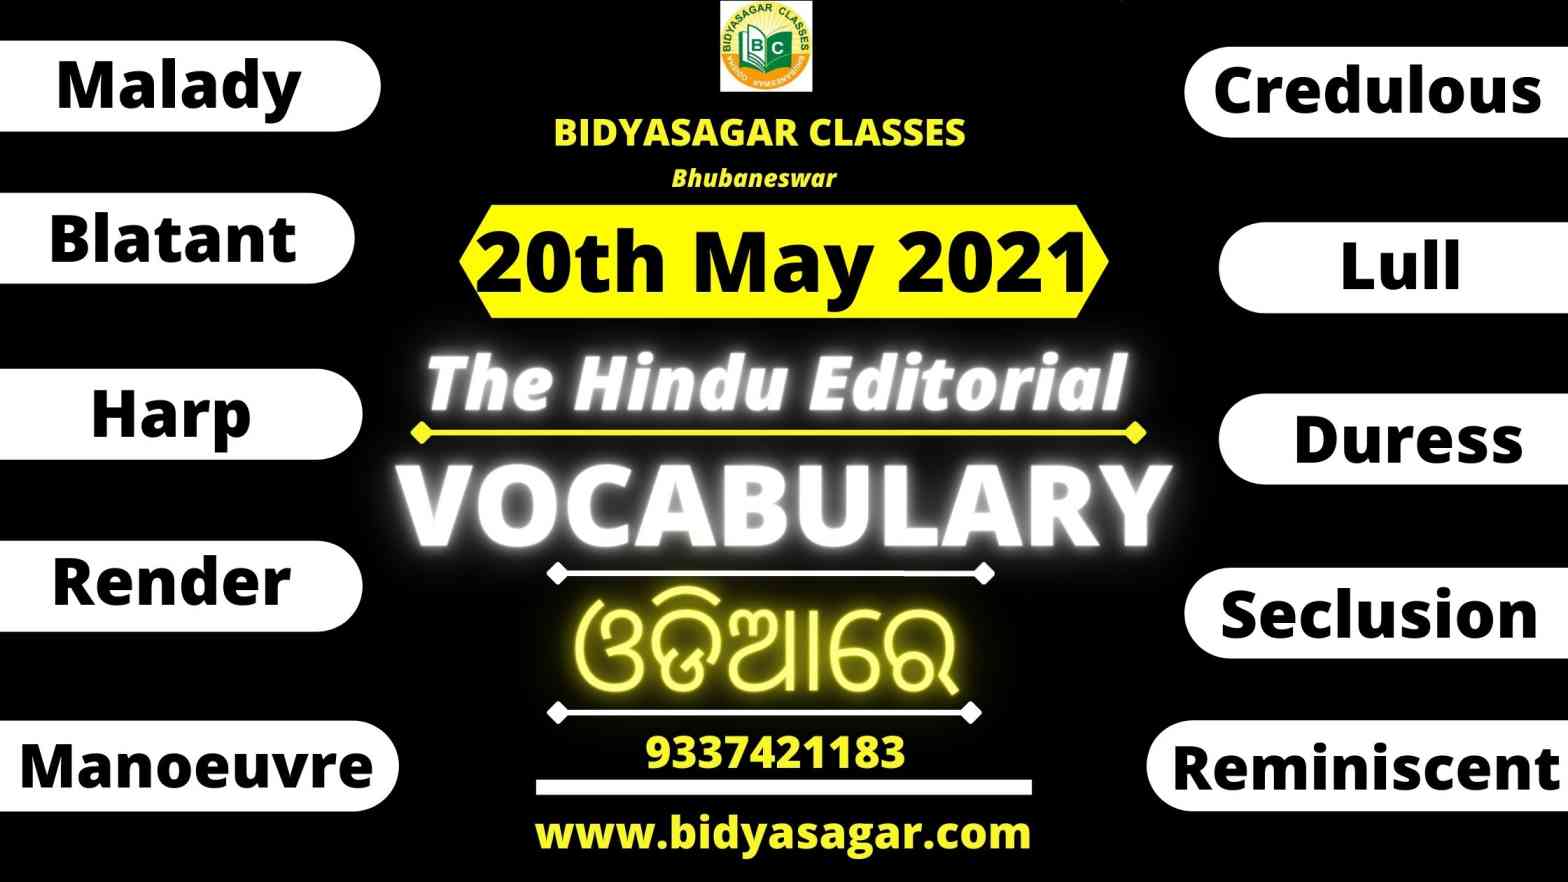 The Hindu Editorial Vocabulary of 20th May 2021